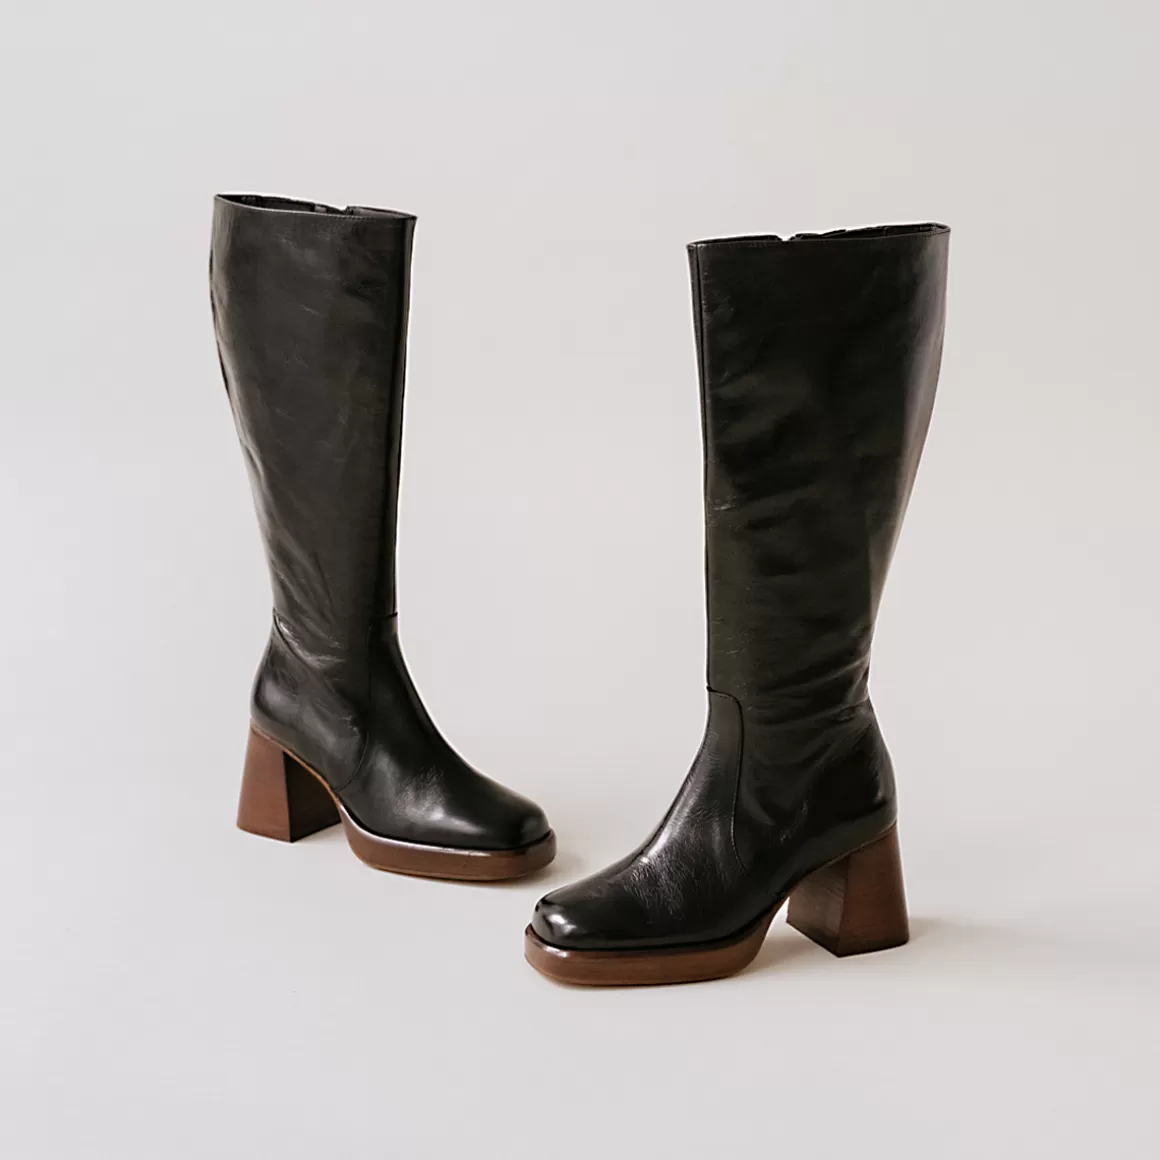 Platform boots<Jonak Flash Sale